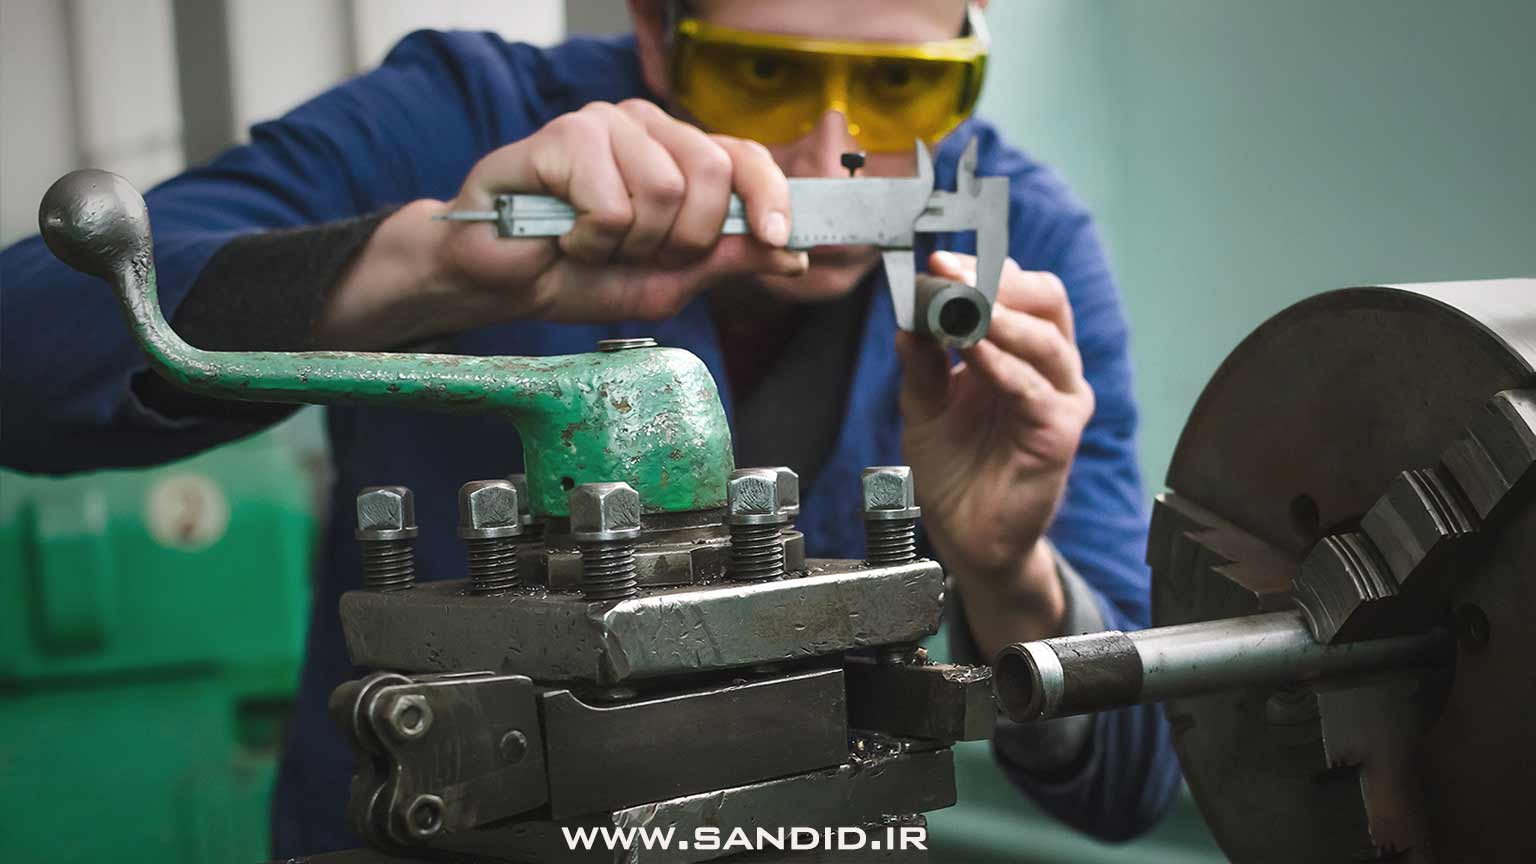 manual-machining-in-sandid-company